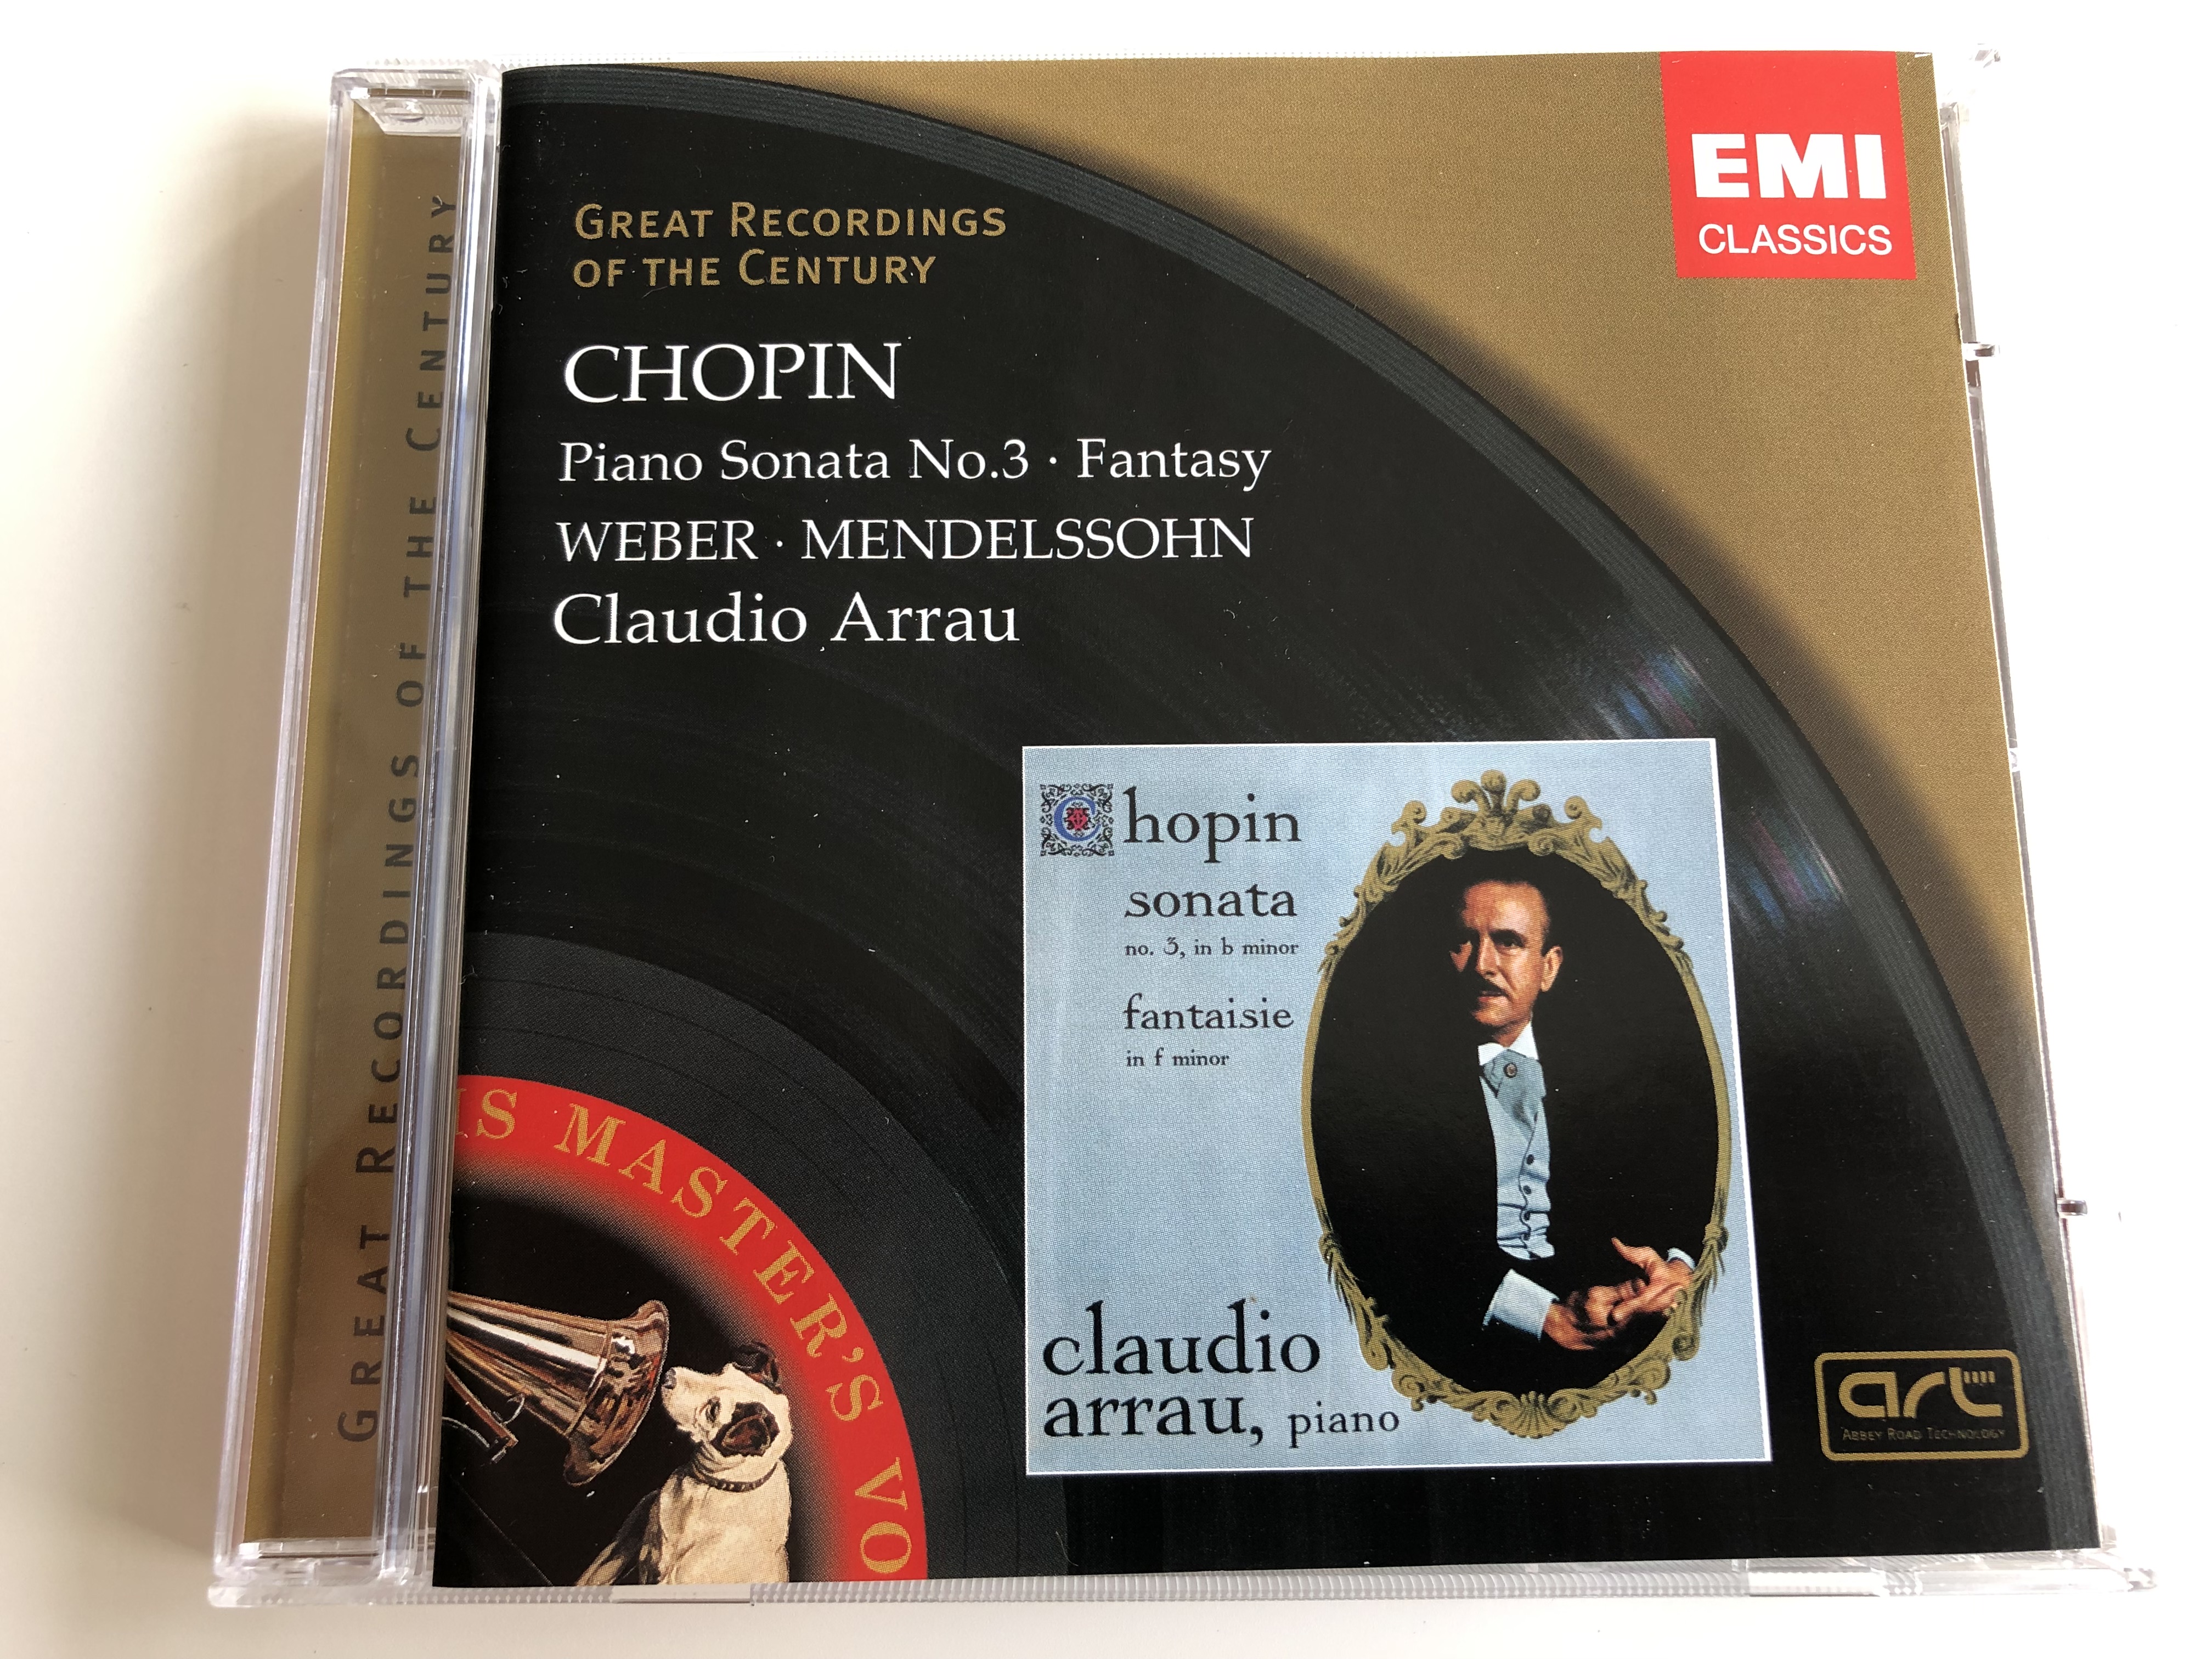 chopin-piano-sonata-no.-3-fantasy-weber-mendelssohn-claudio-arrau-emi-classics-audio-cd-2004-stereo-mono-724356288423-1-.jpg